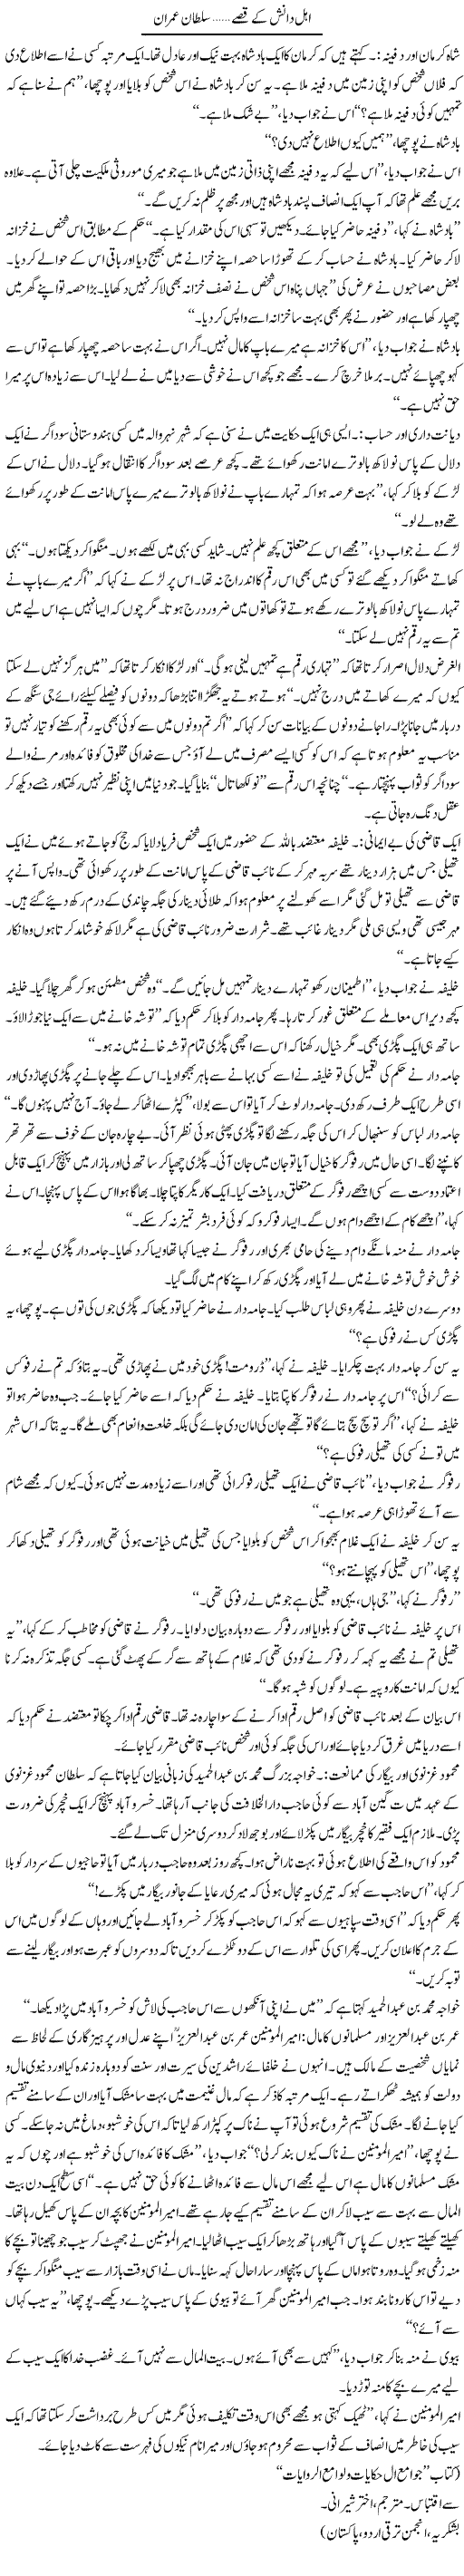 Ahle Danish Ke Qissay | Sultan Imran | Daily Urdu Columns